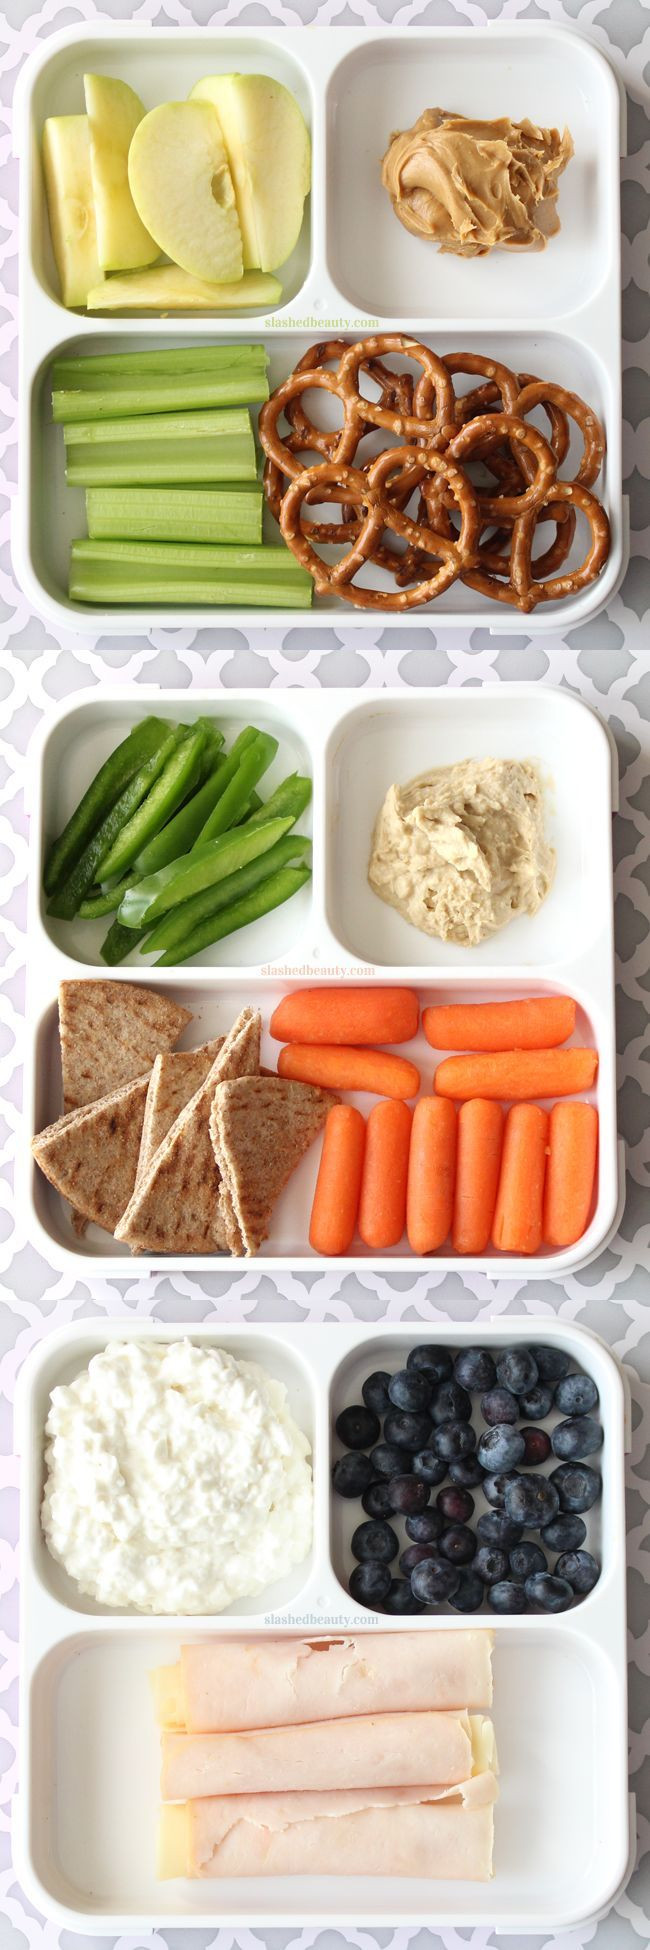 Quick Healthy Snacks
 Best 25 Healthy snacks ideas on Pinterest